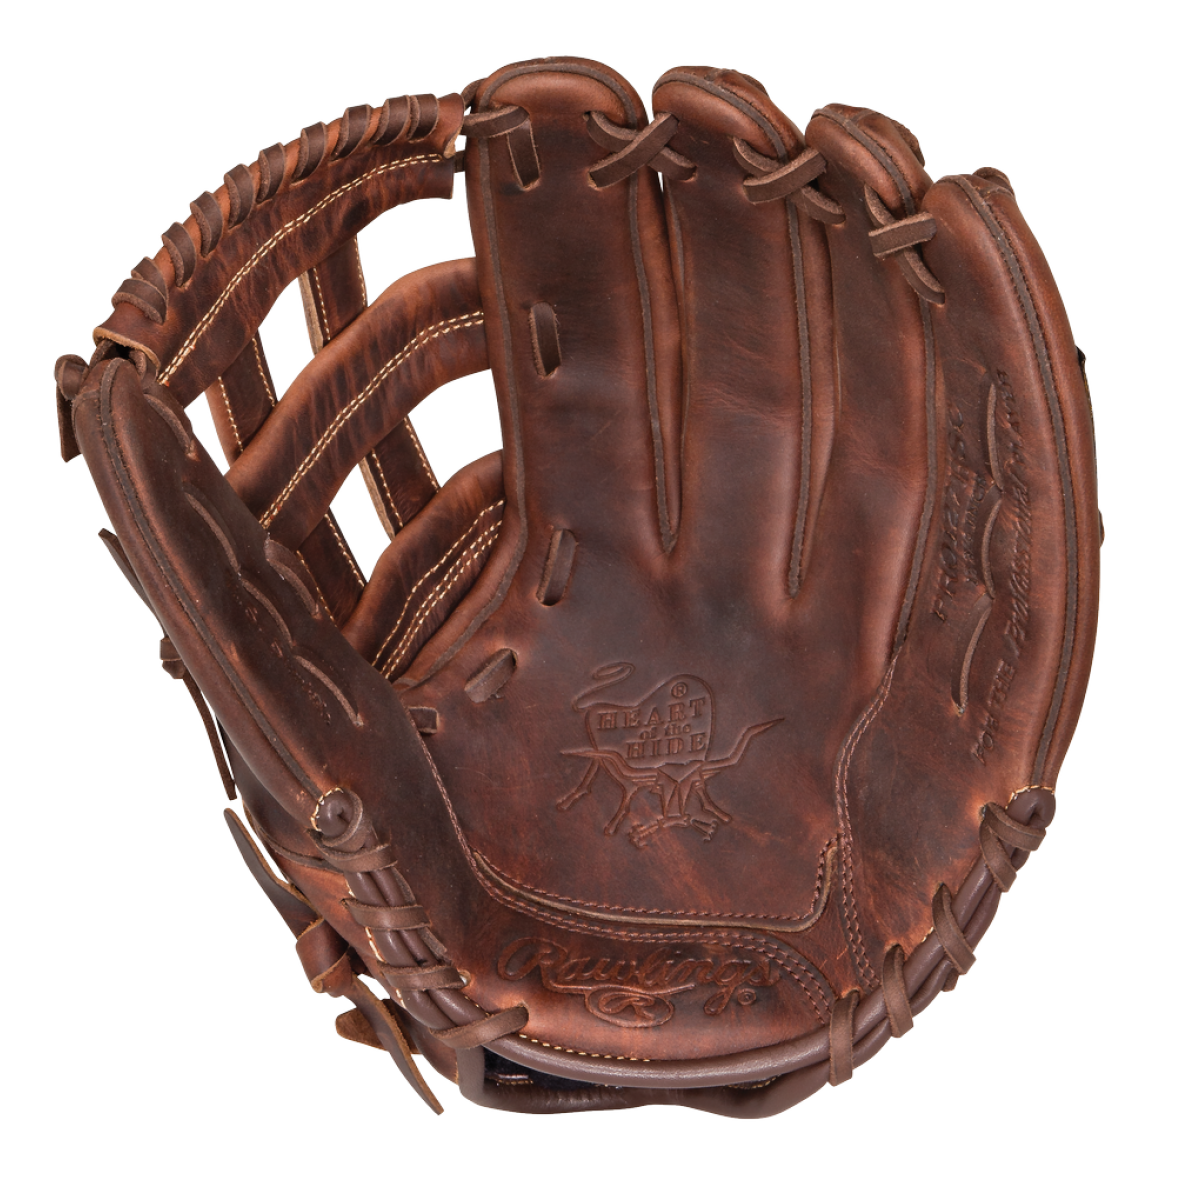 free-baseball-glove-download-free-baseball-glove-png-images-free